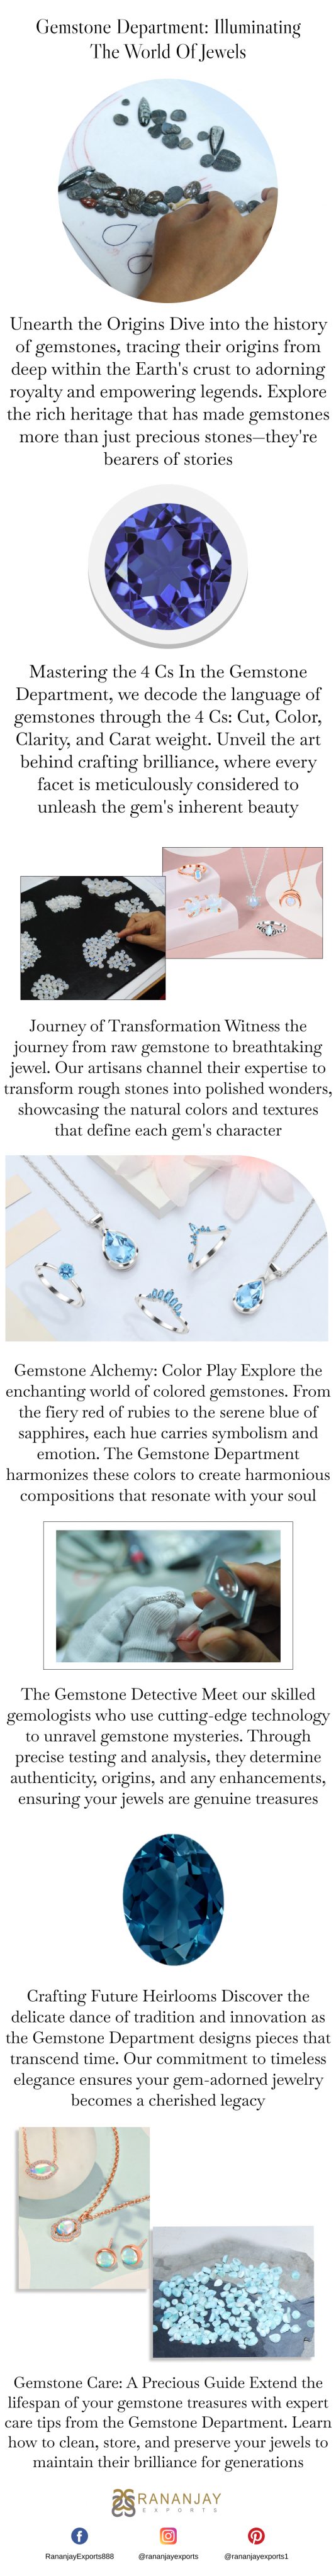 Gemstone Department: Illuminating the World of Jewels